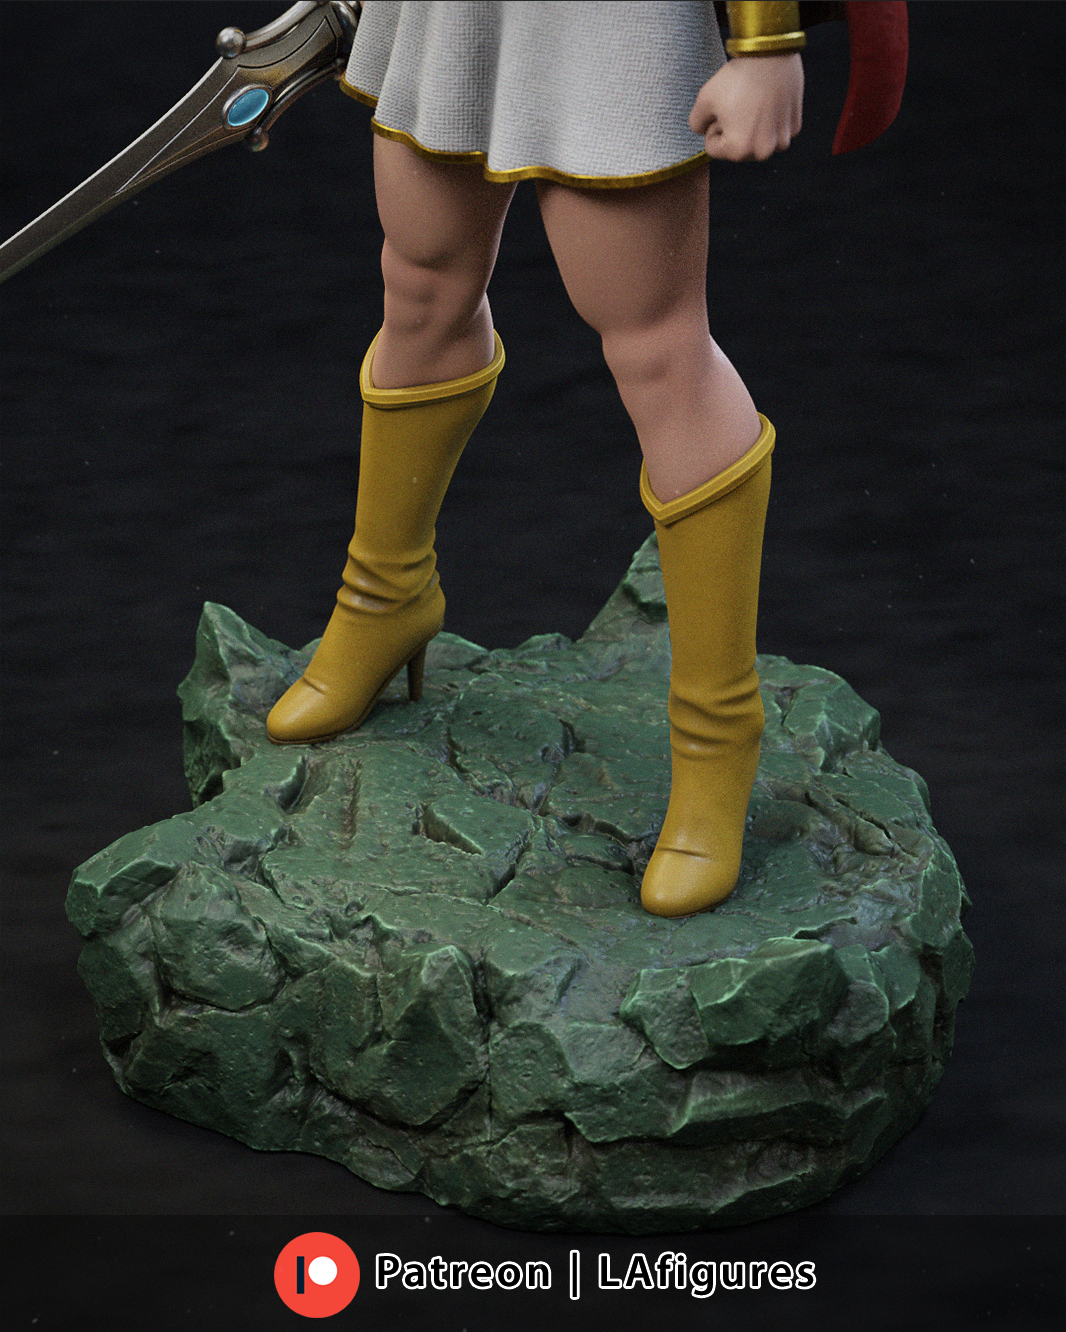 She-ra (He-Man) Statue - Fan Art 10 or 12 scale 223mmmm - 3D Print